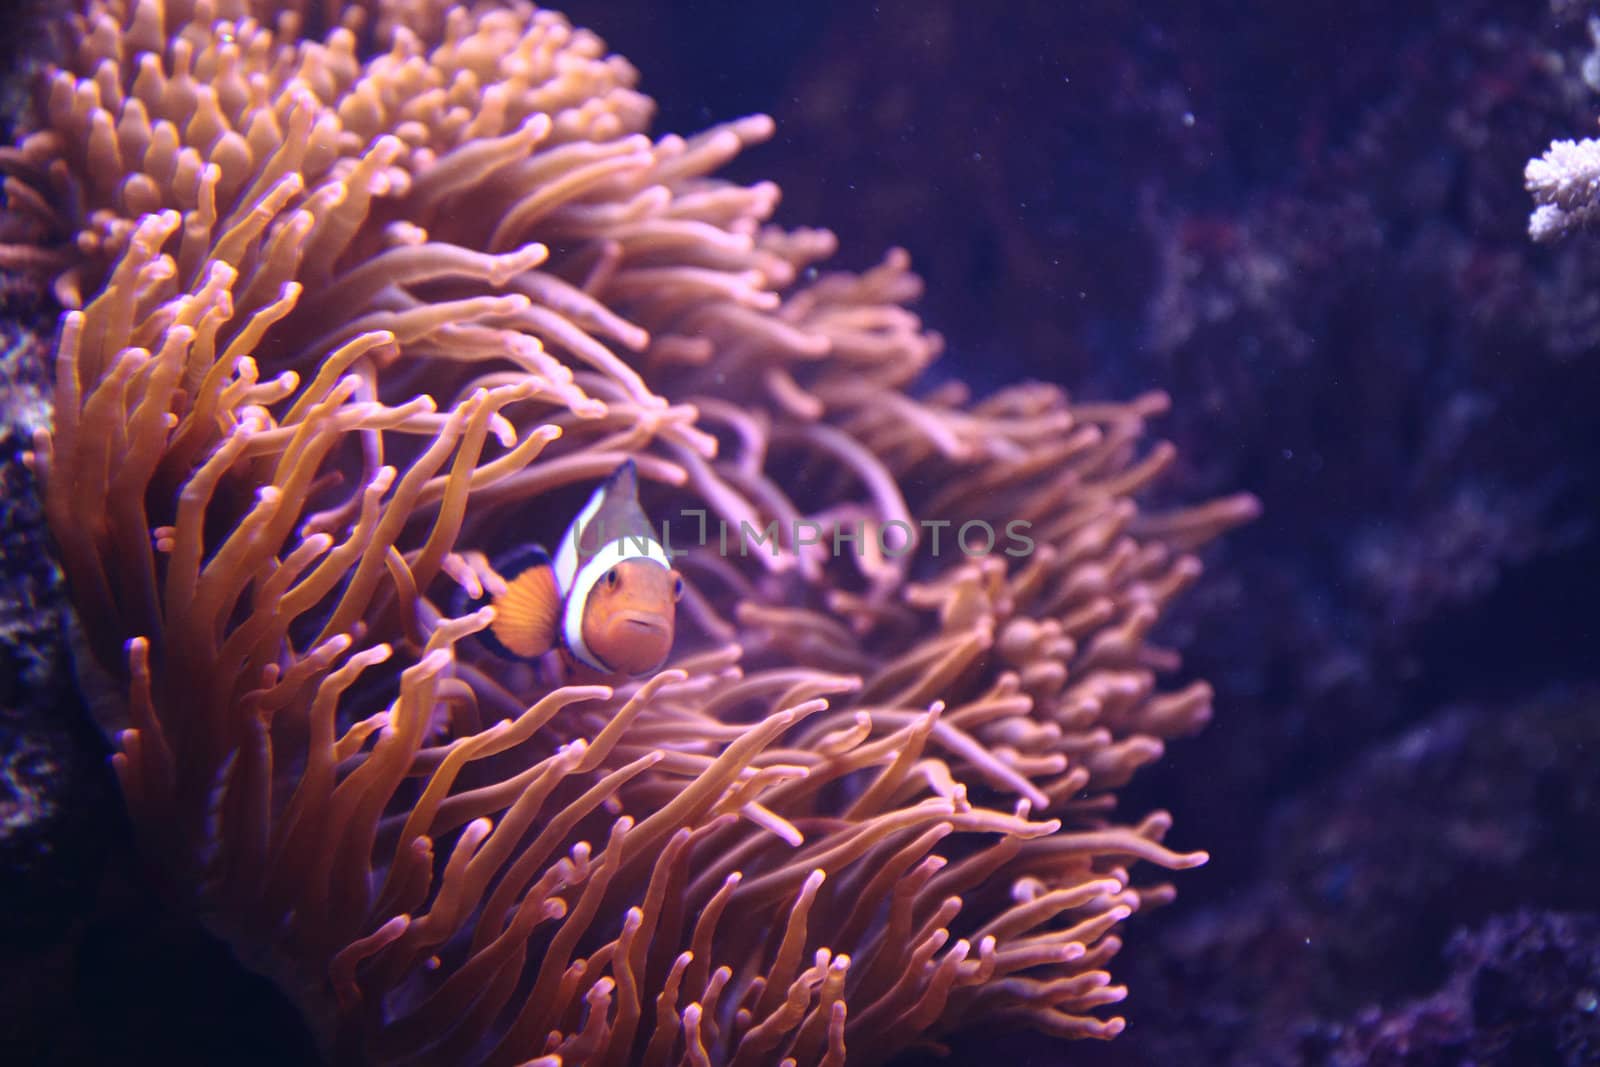 nice aquarium background with the clown fish